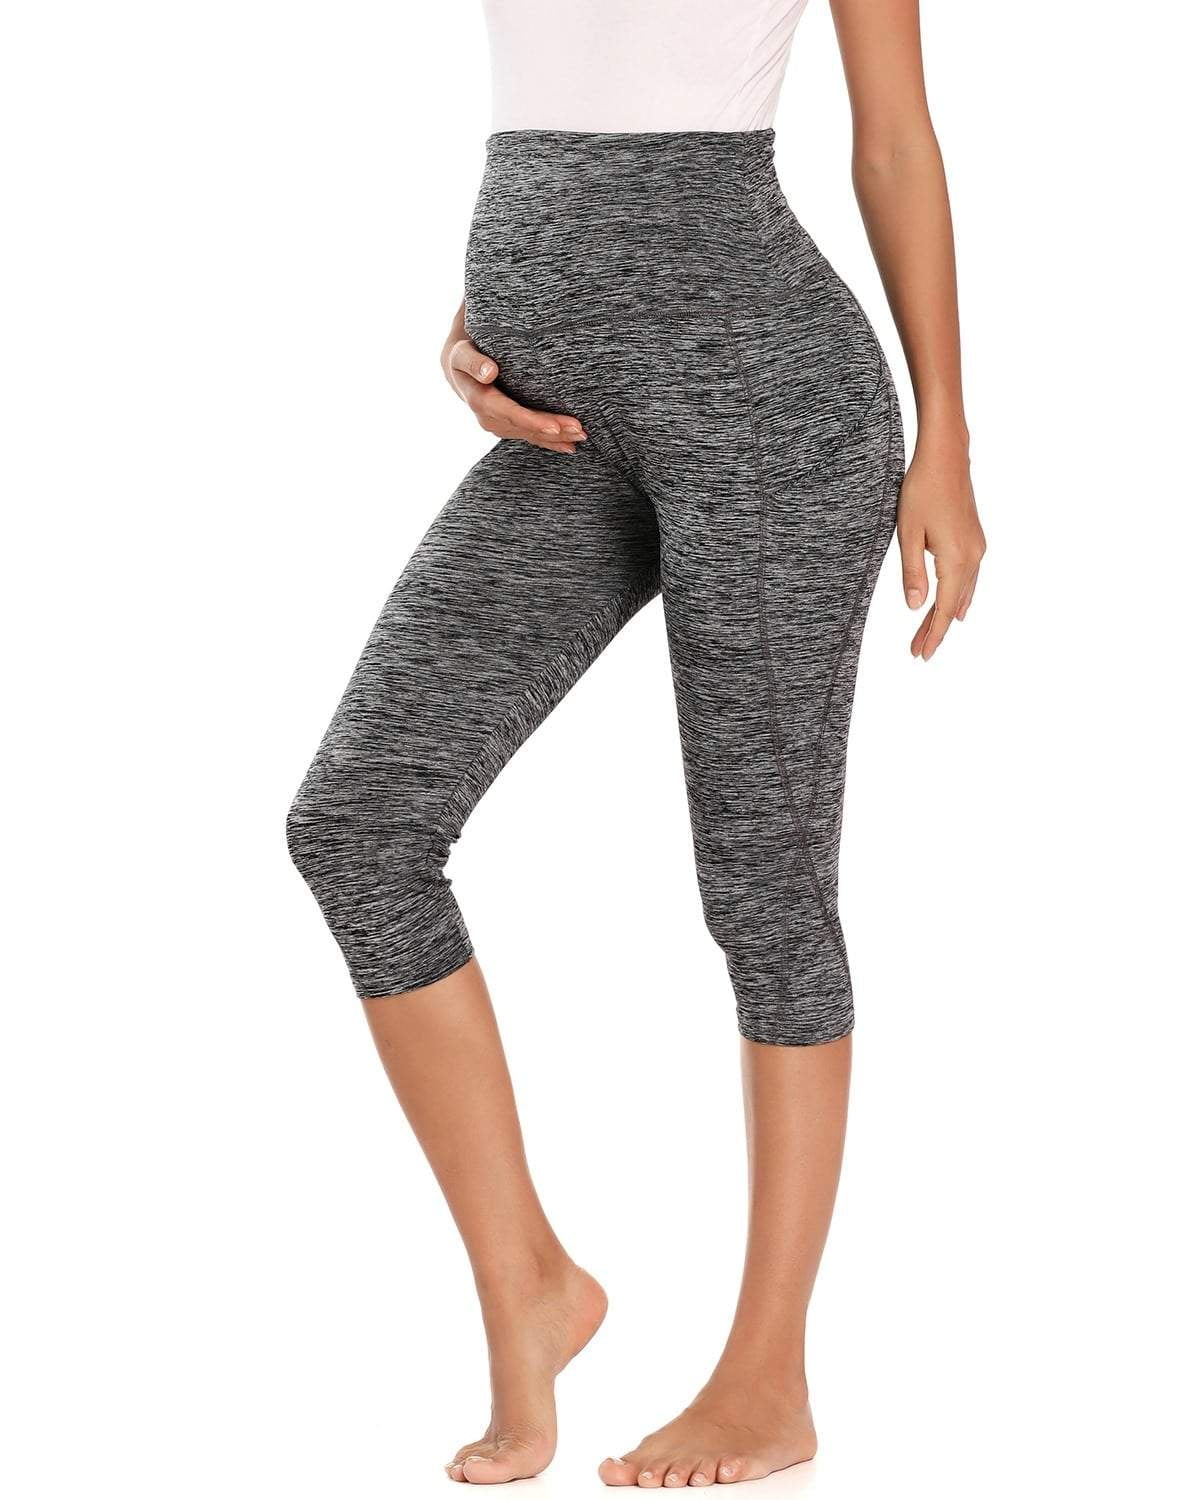 Ecavus Women's Maternity Yoga Pants with Pockets Over Bump Active Leggings Workout Athletic Full Length Pregnancy Pants 